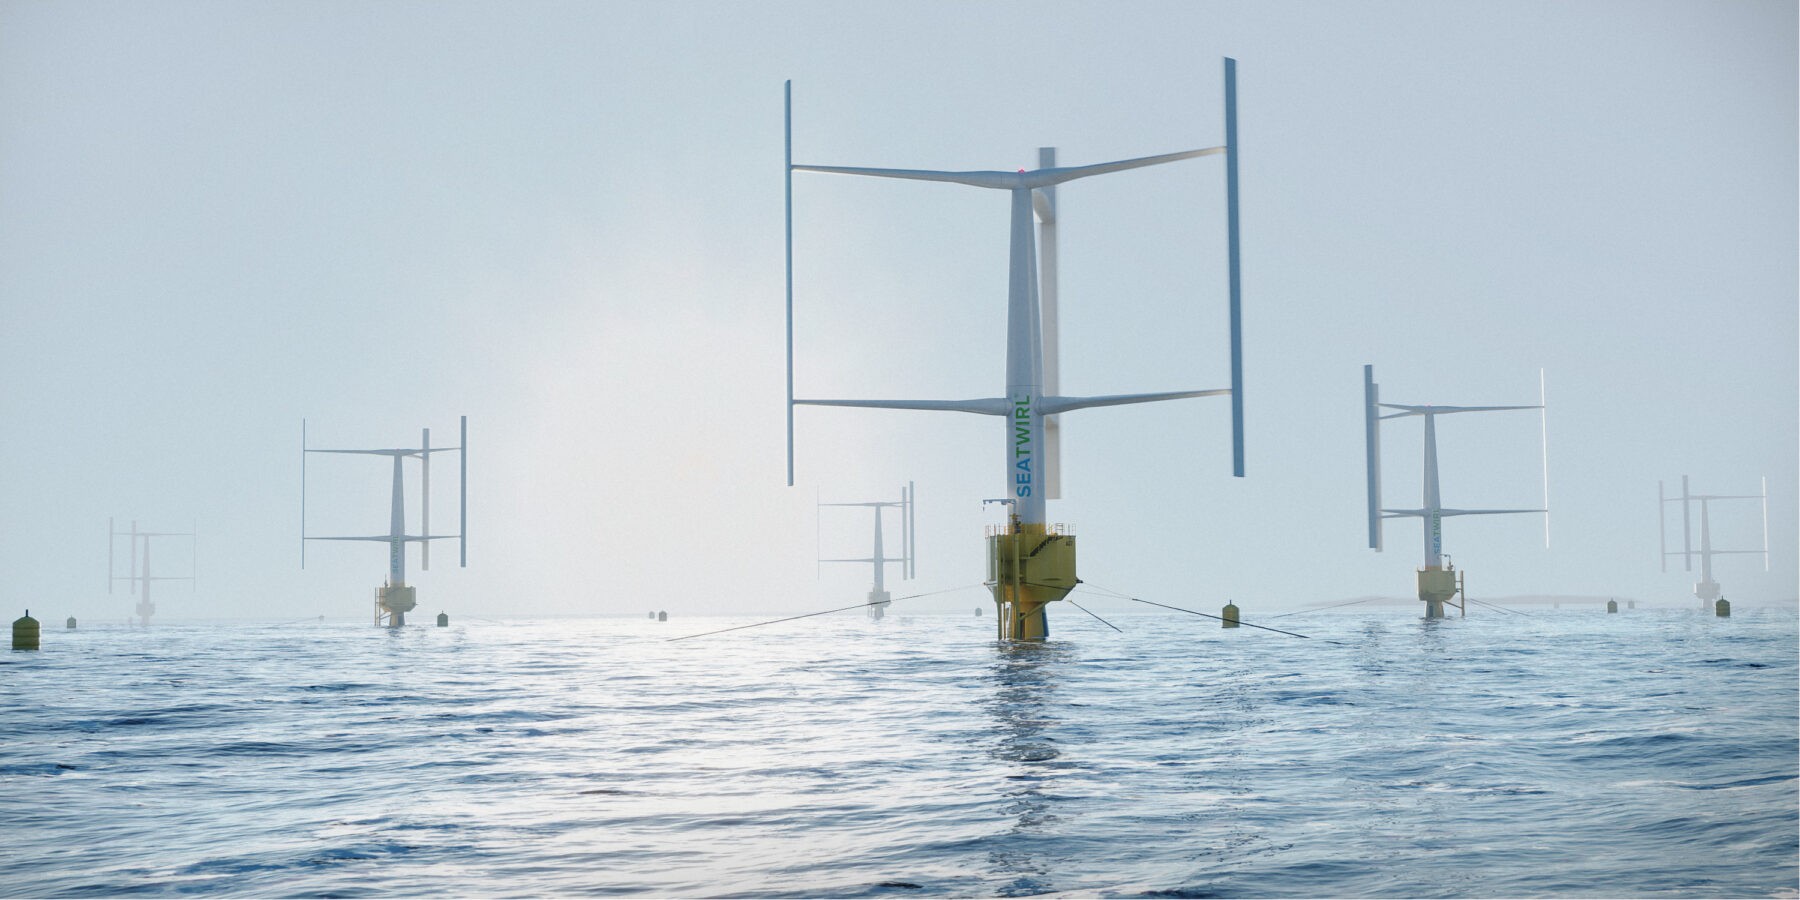 electrek.co - Michelle Lewis - Norway just greenlit this vertical-axis floating wind turbine